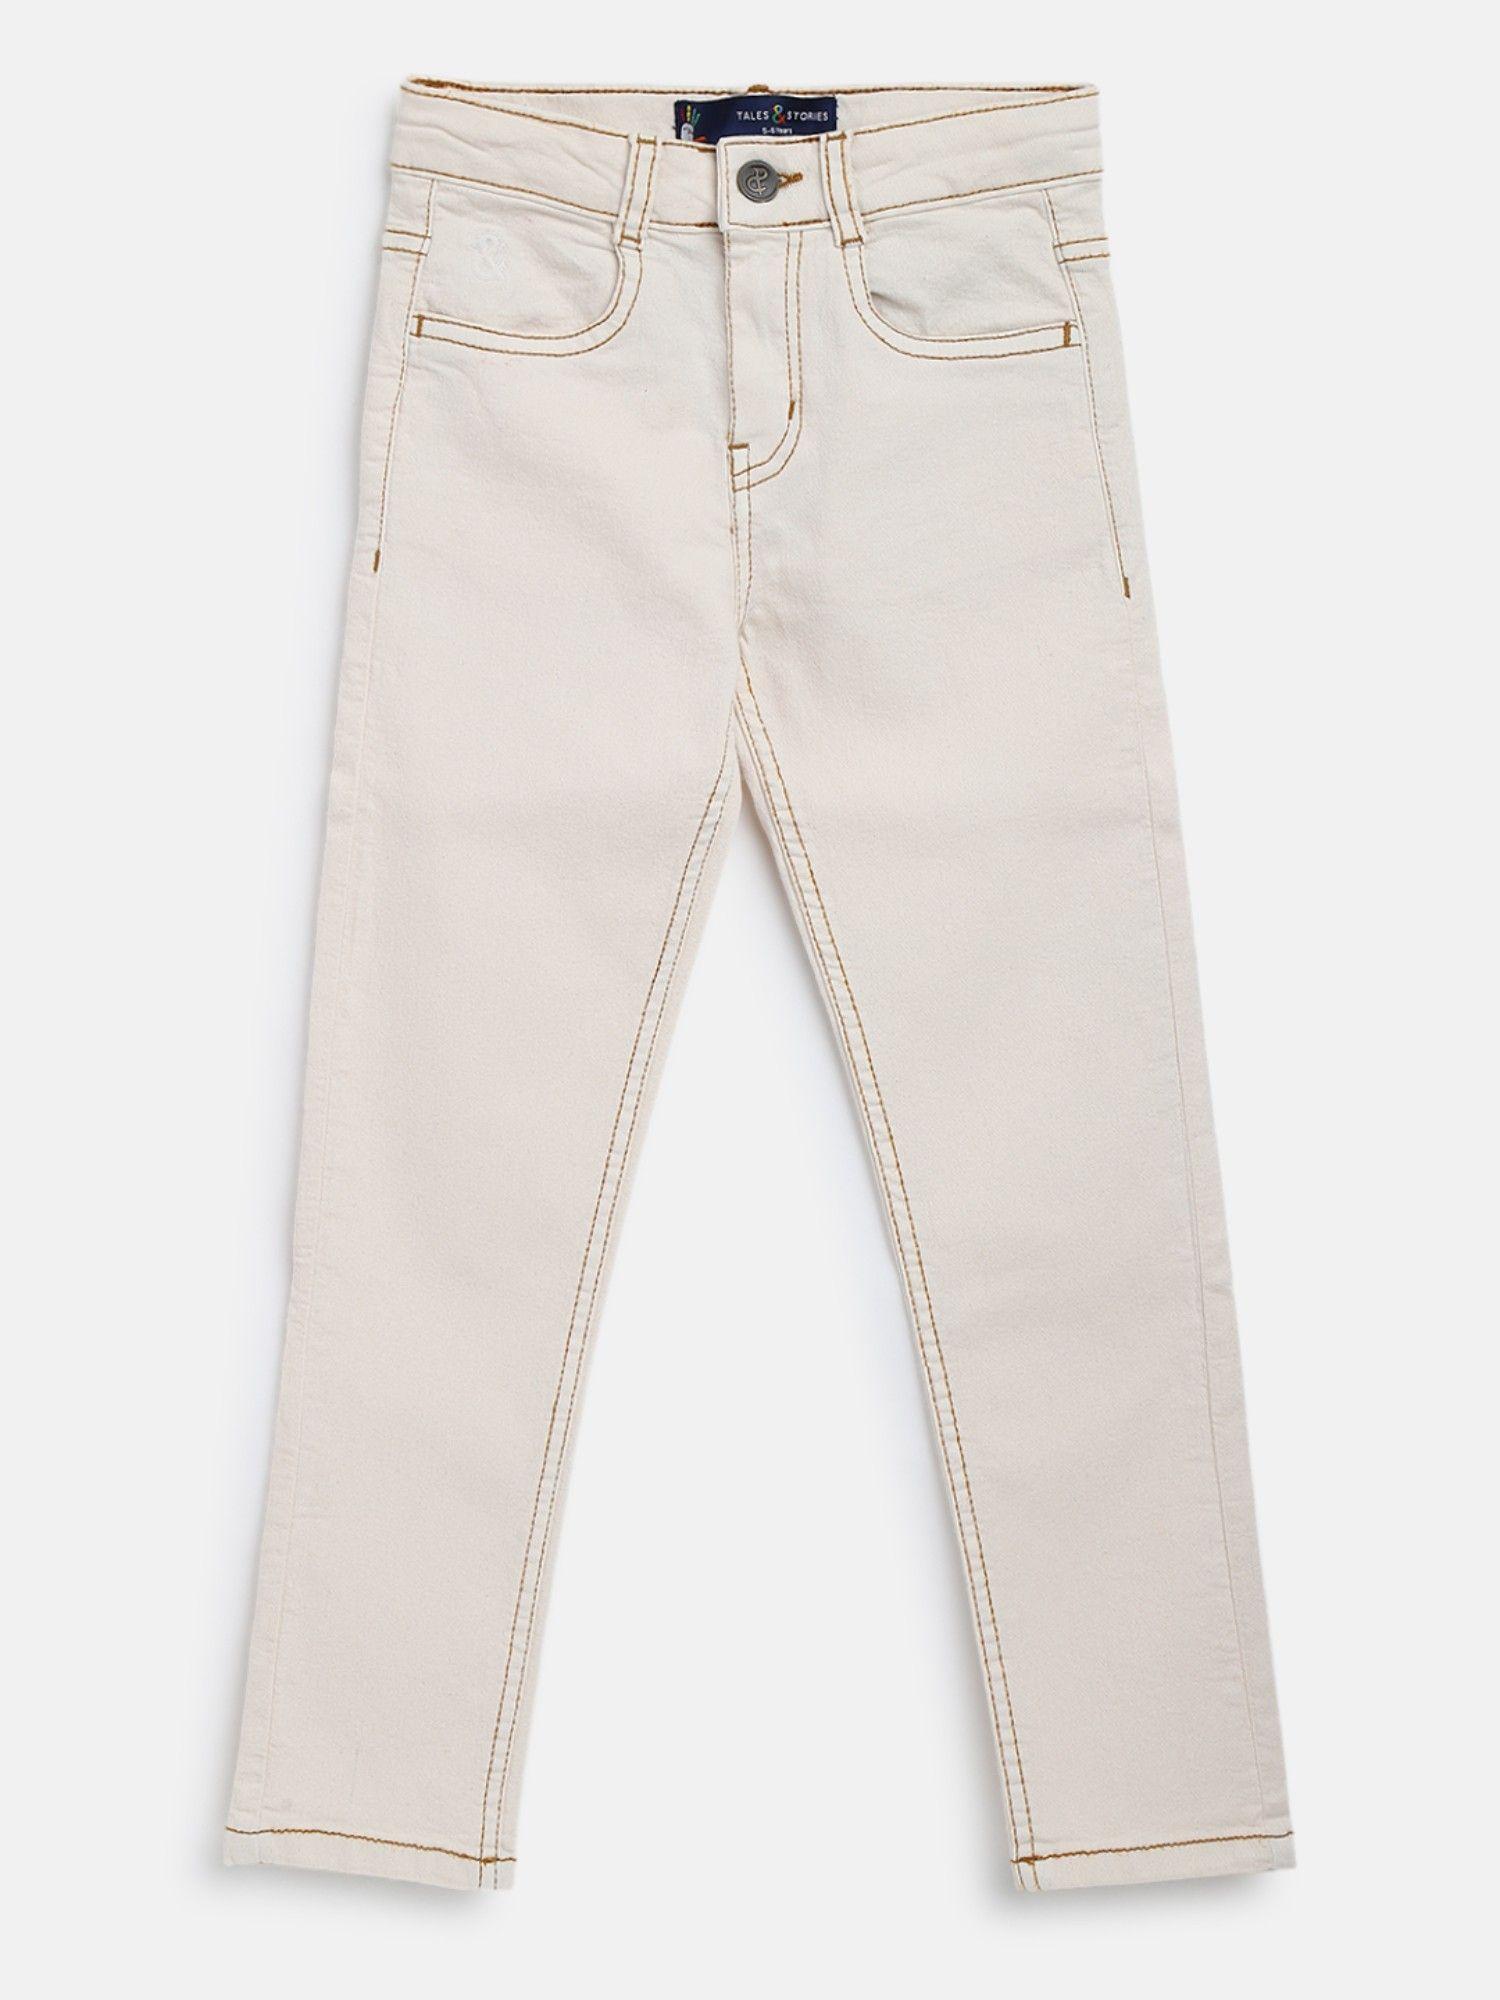 Boys Cream Cotton Lycra Solid Jeans